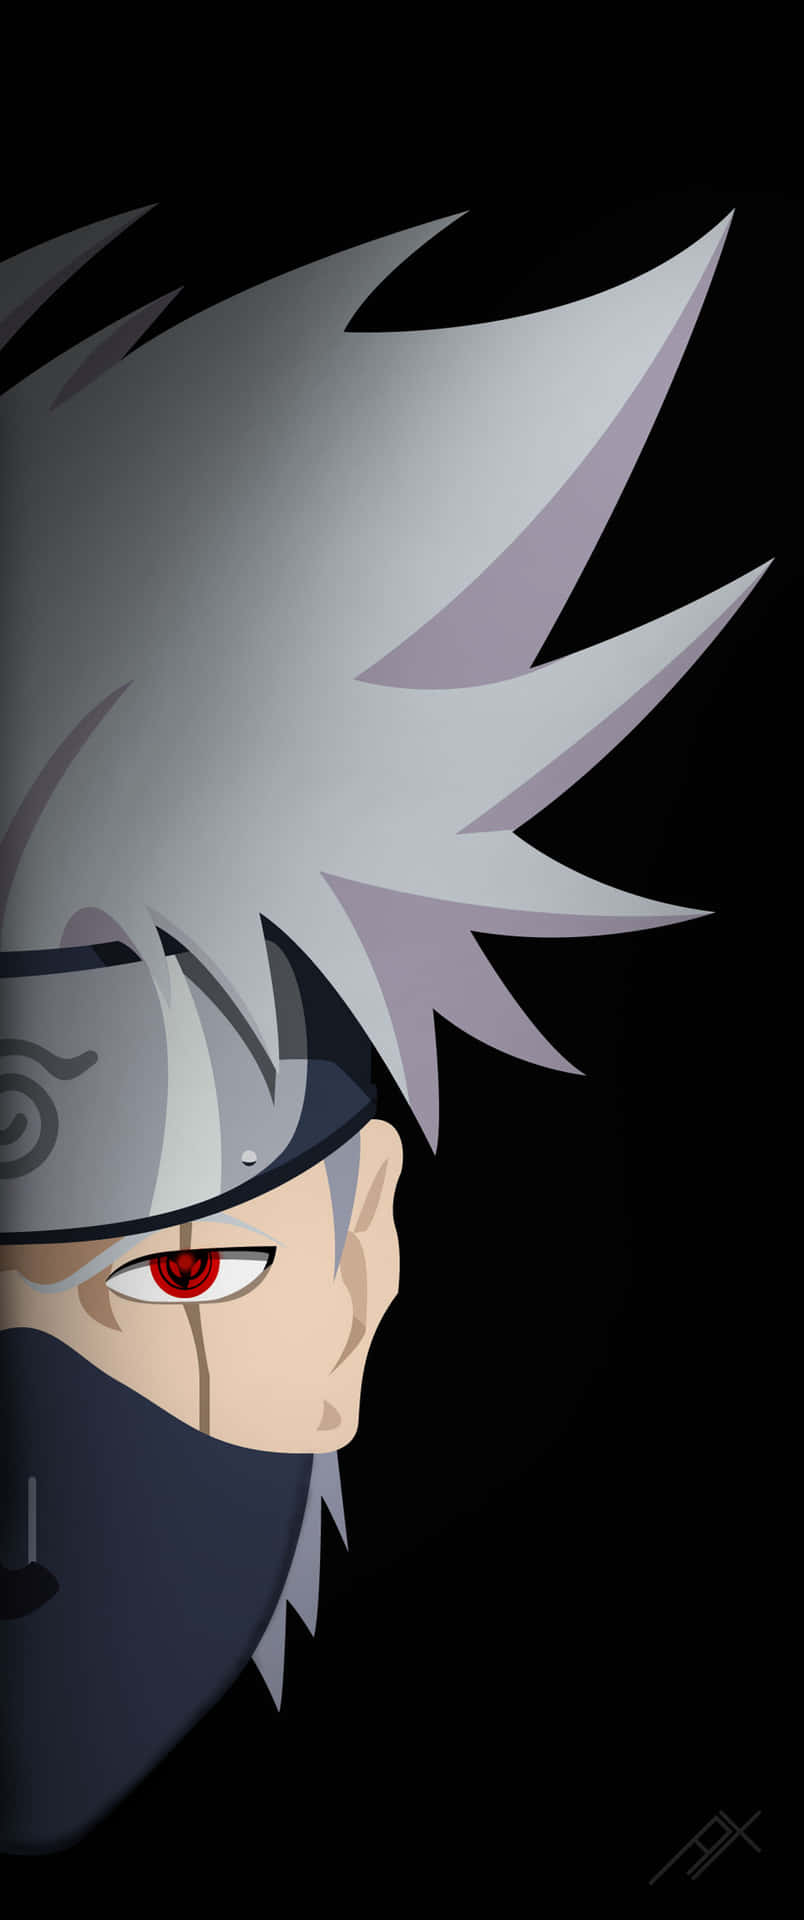 Download Naruto Anime Character Kakashi Sketch Pictures